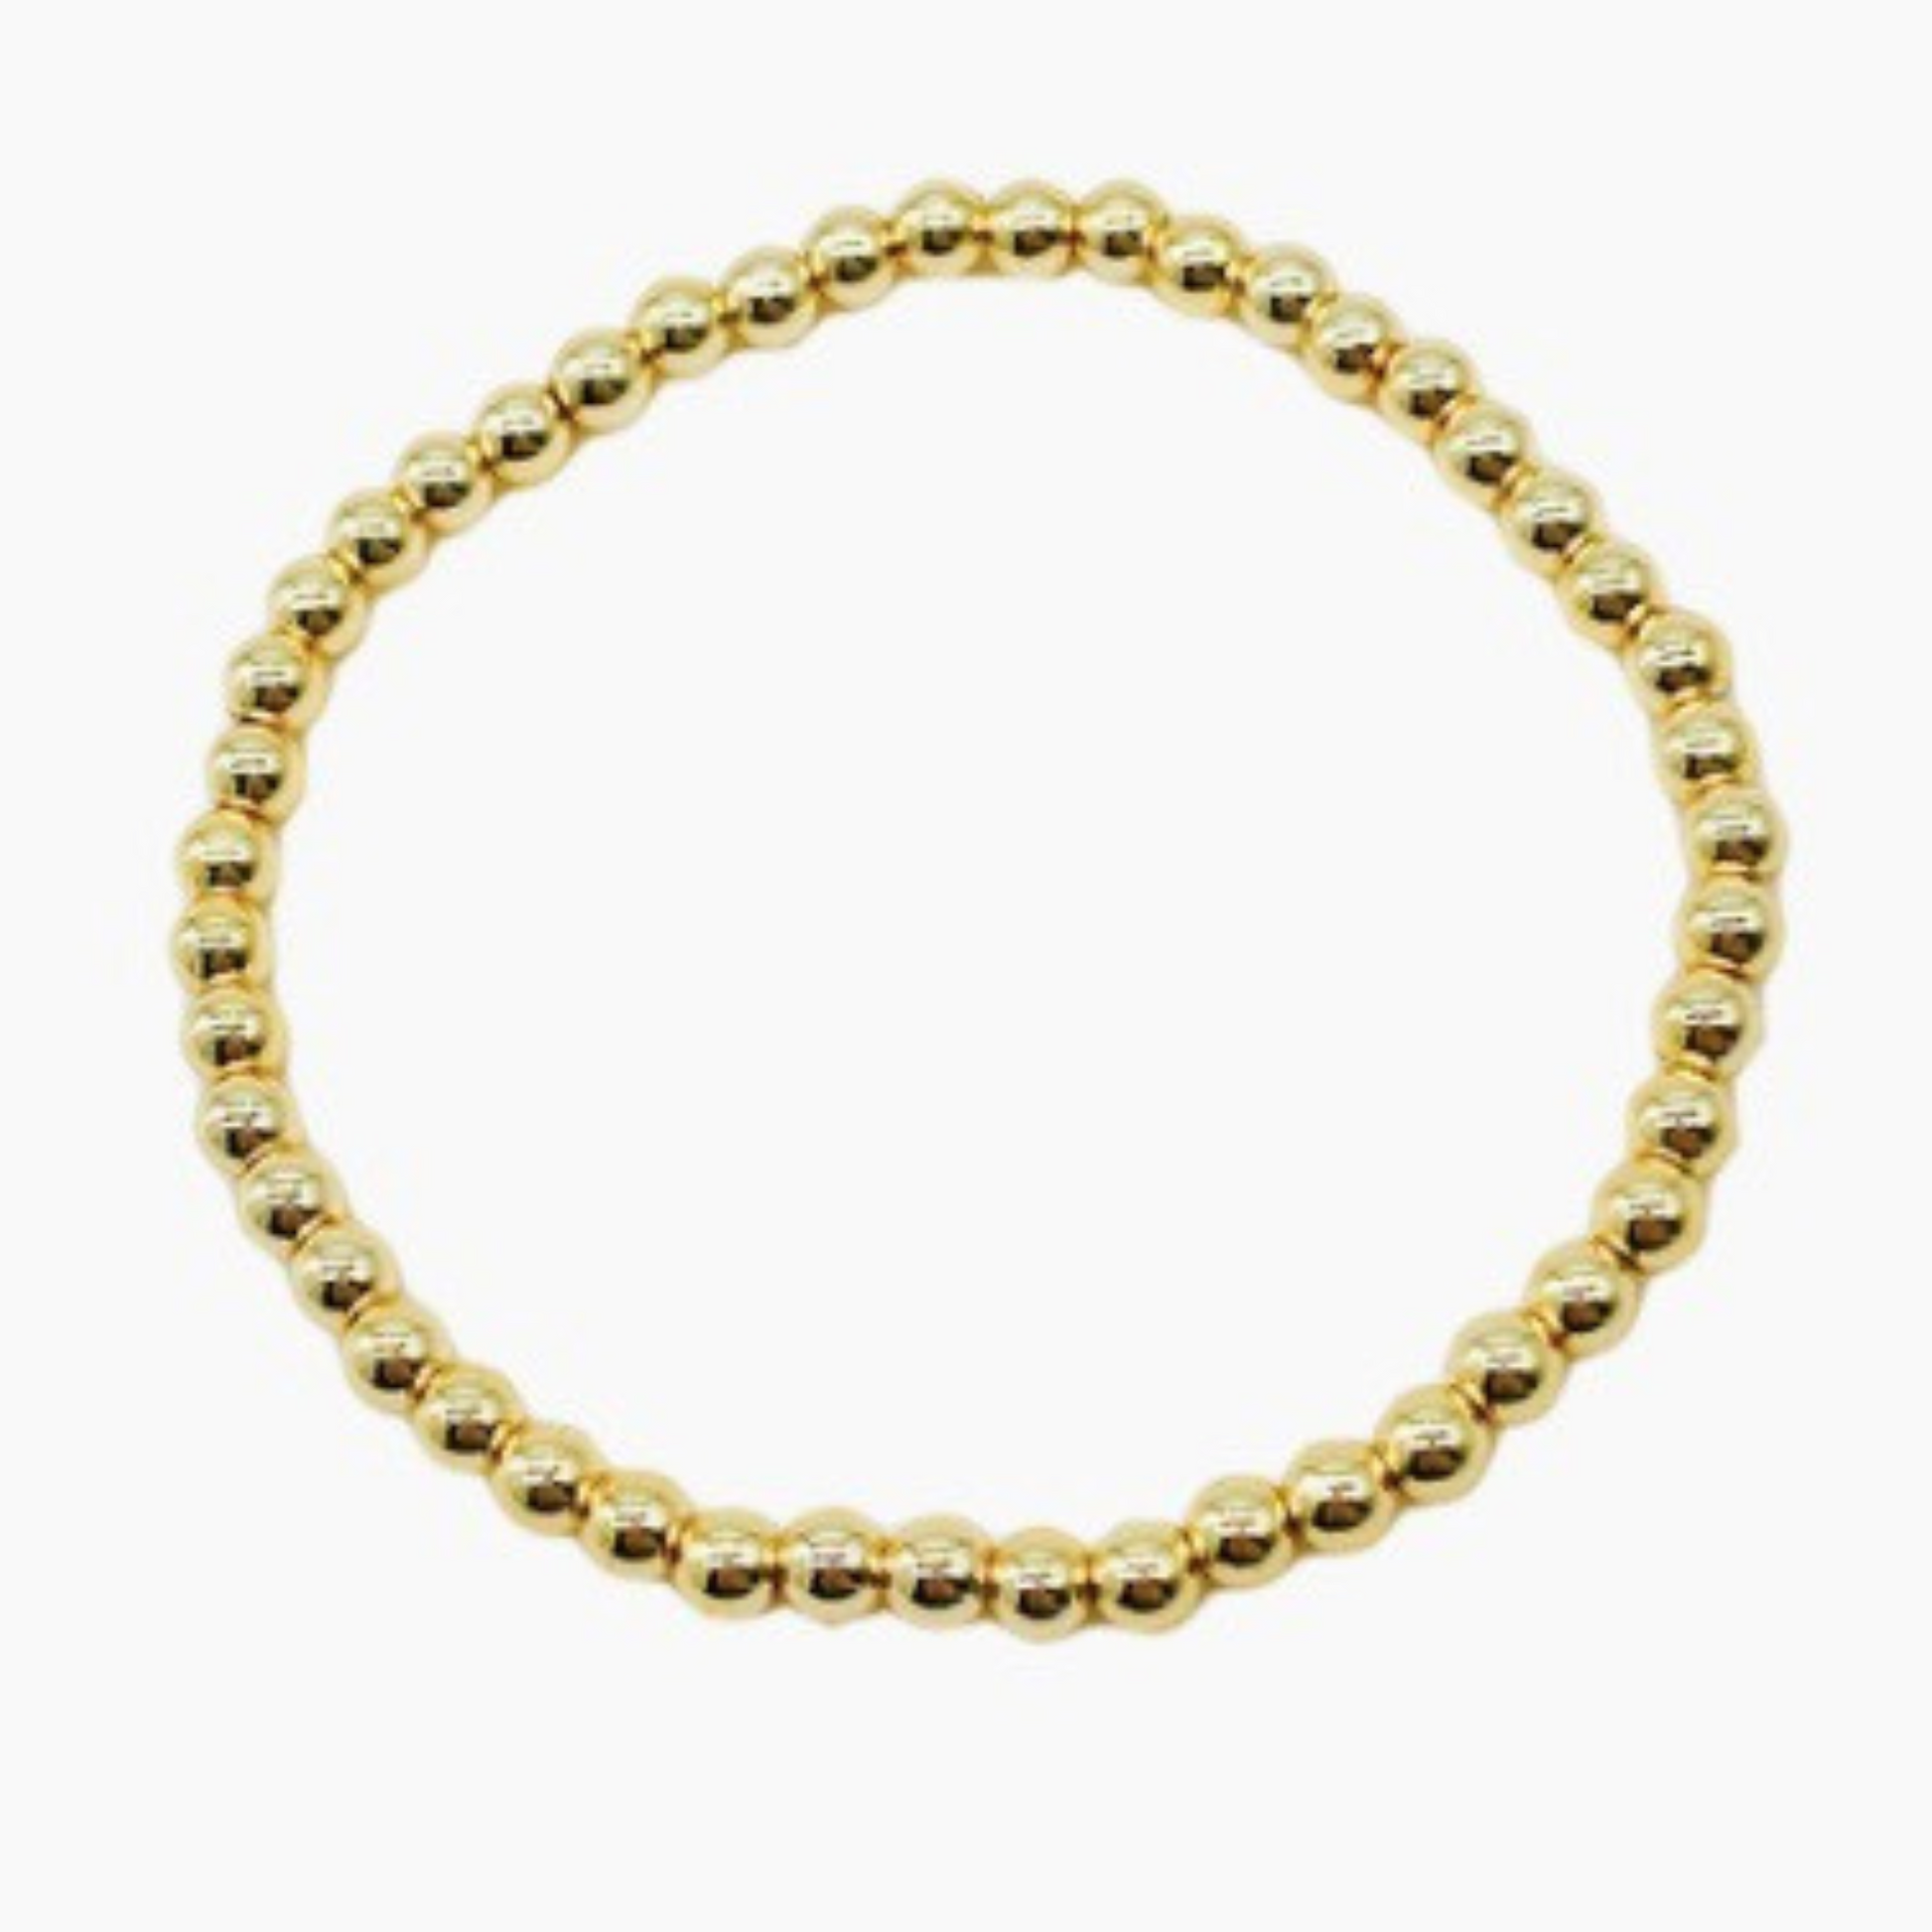 Medium sized bead stretchy gold bracelet